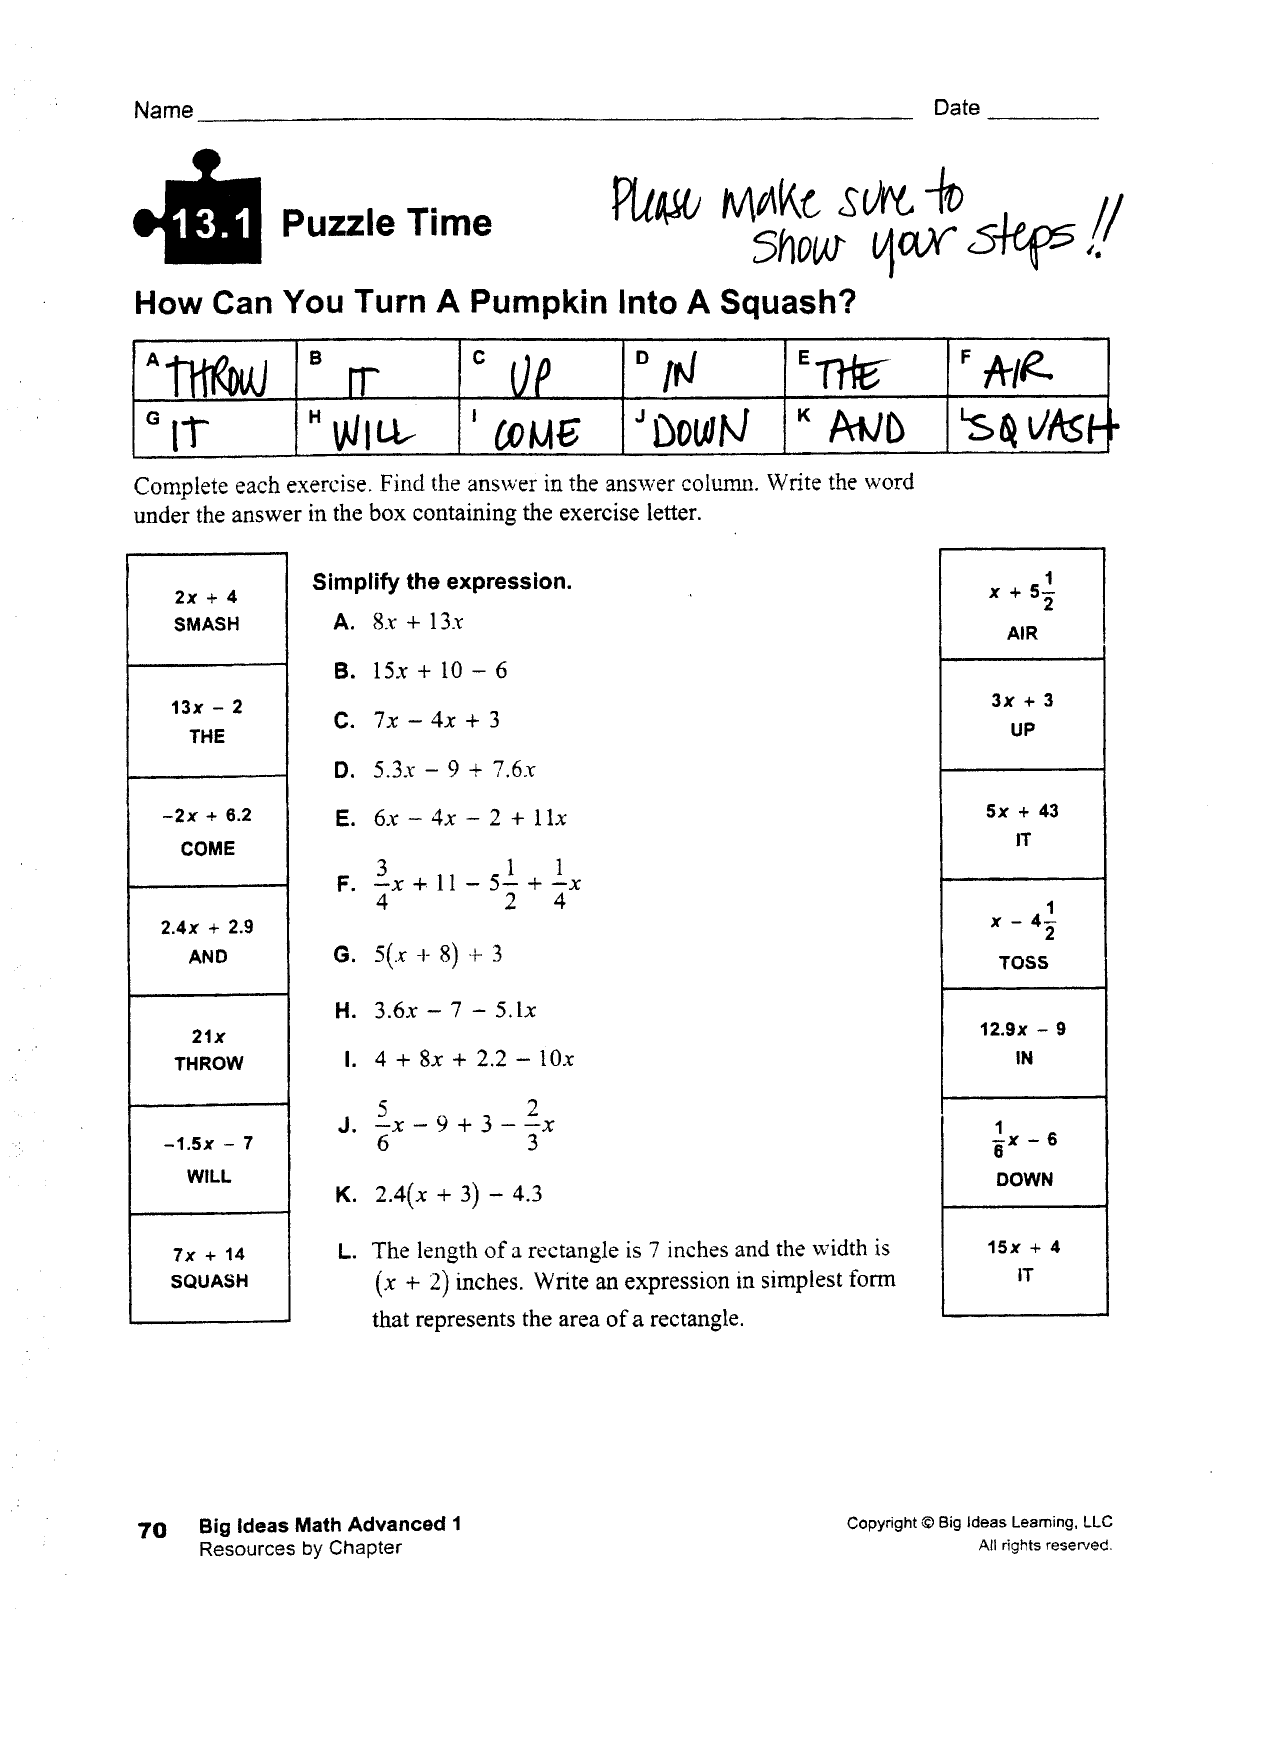 Big Ideas Math Green Assessment Book Answer Key What Is An Algebra Teacher's Favorite Breakfast Answer Key Pdf